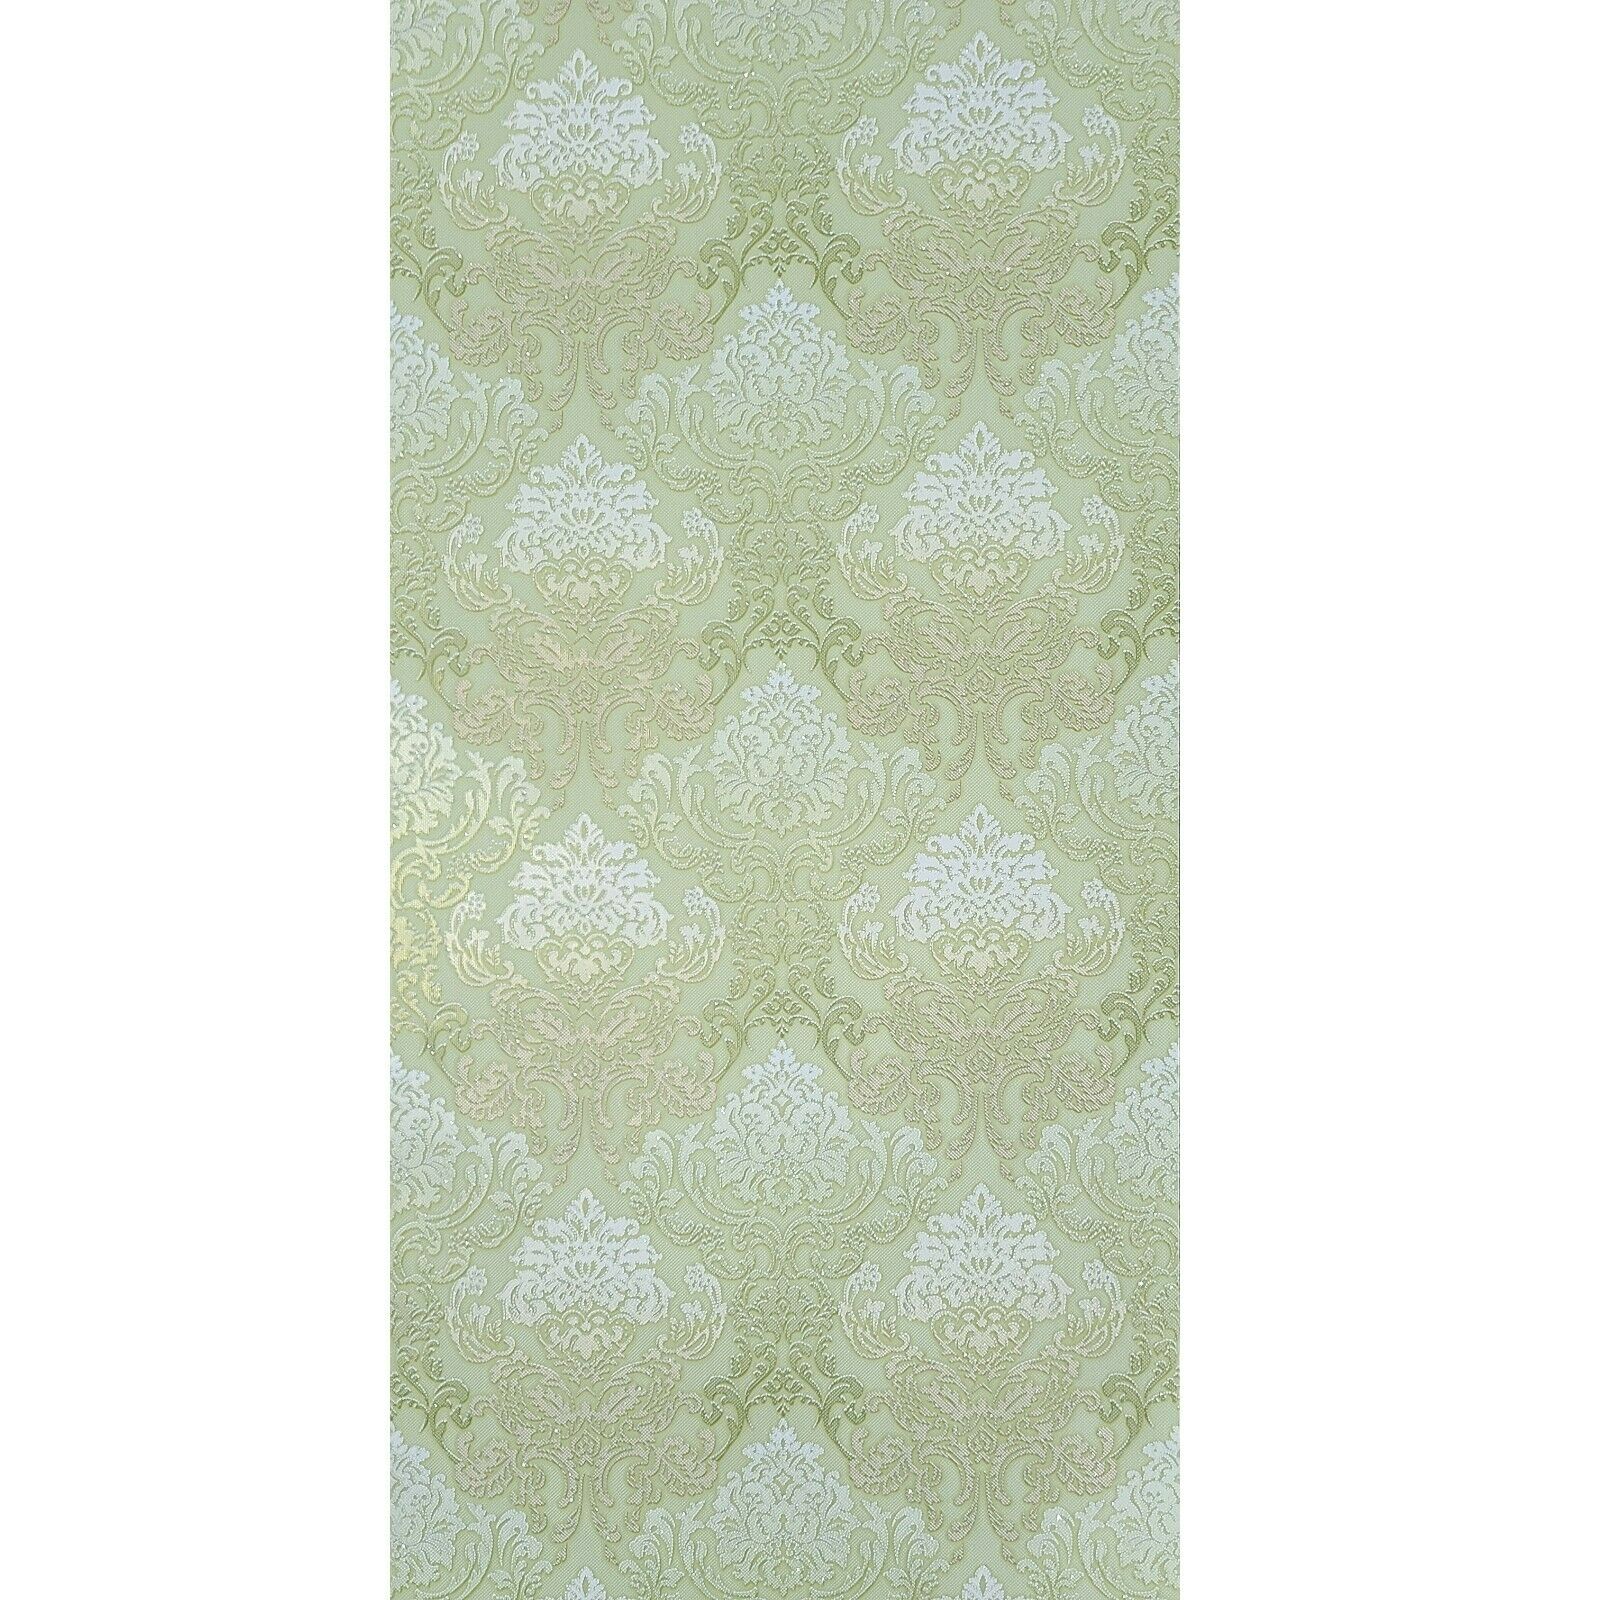 Wallpaper Royal Artichoke reseda-green | Wallpaper from the 70s